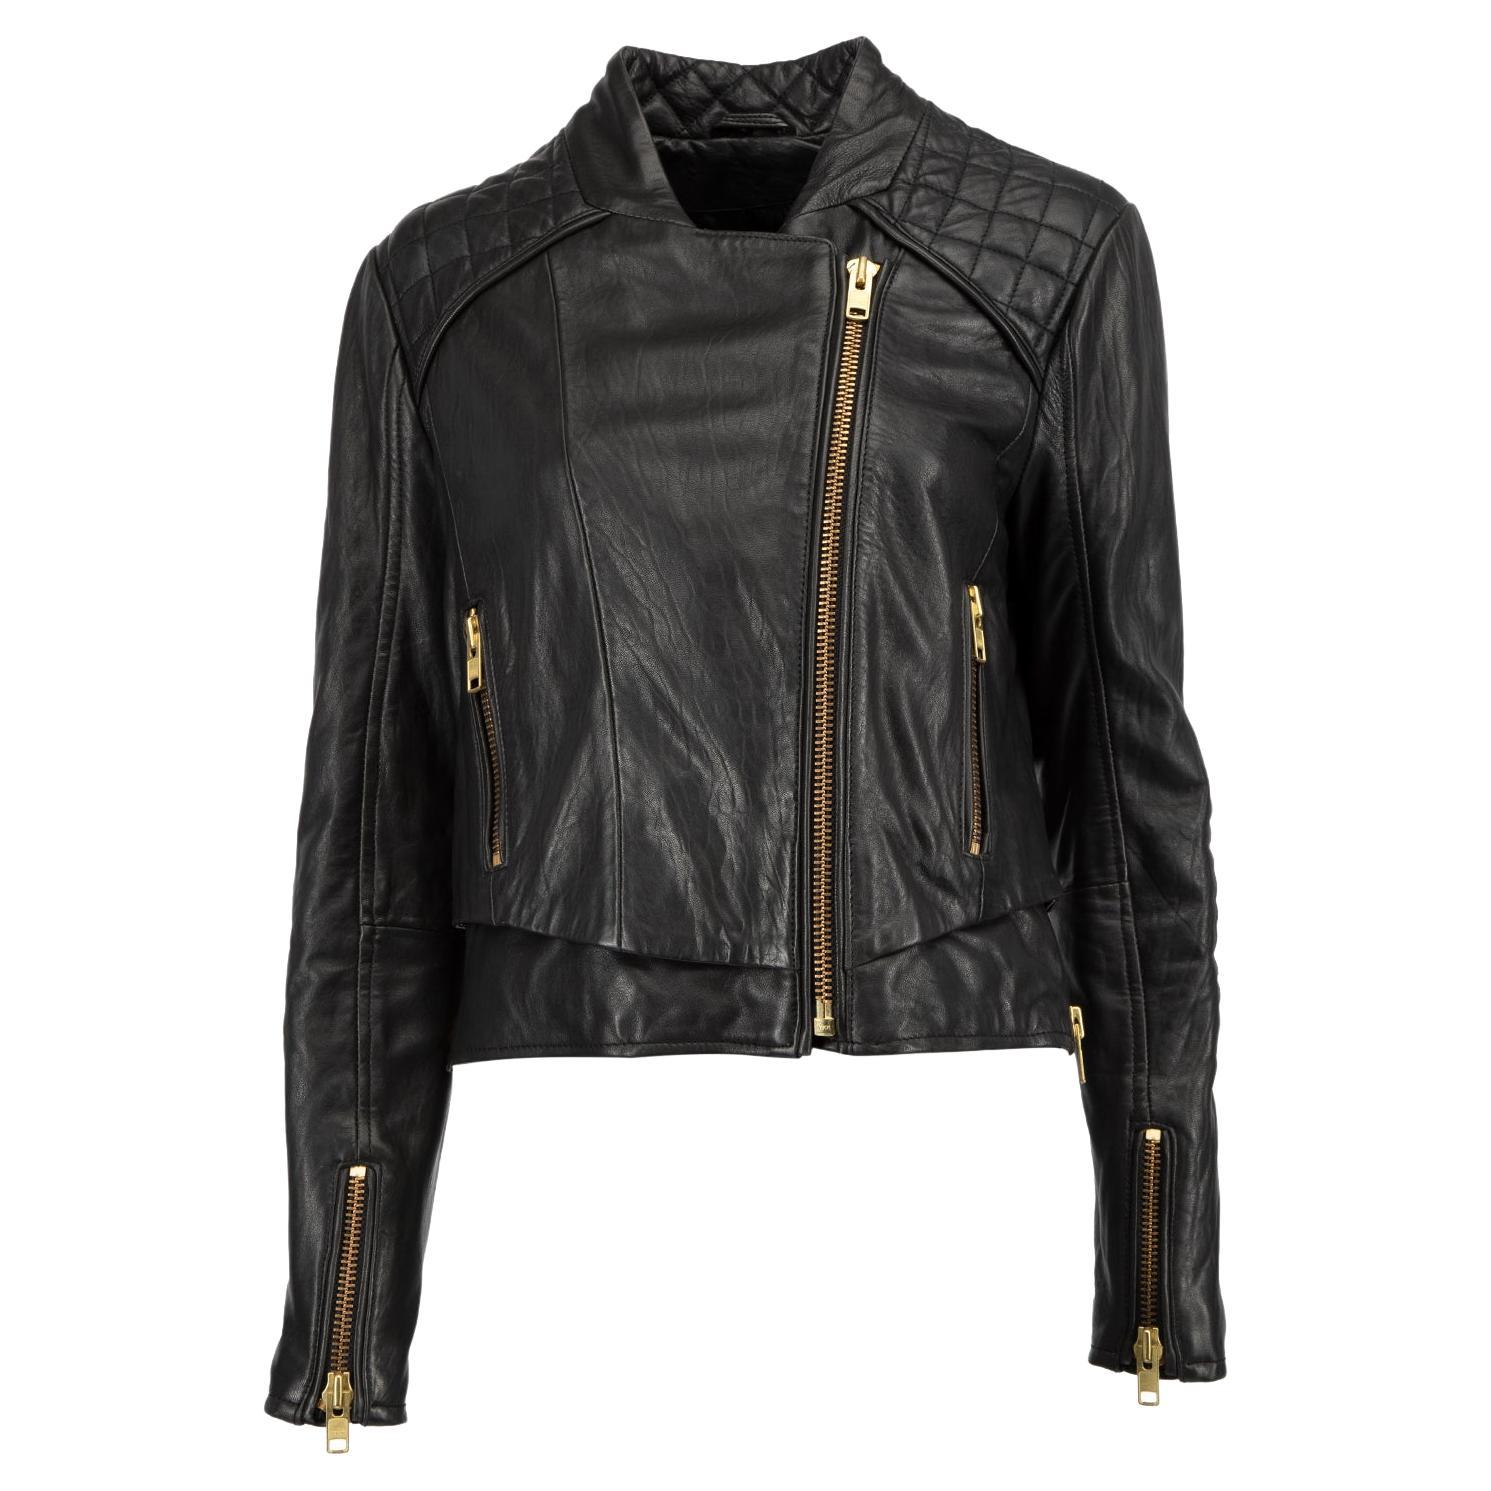 Pre-Loved The Kooples Women's Black Leather Quilted Biker Jacket